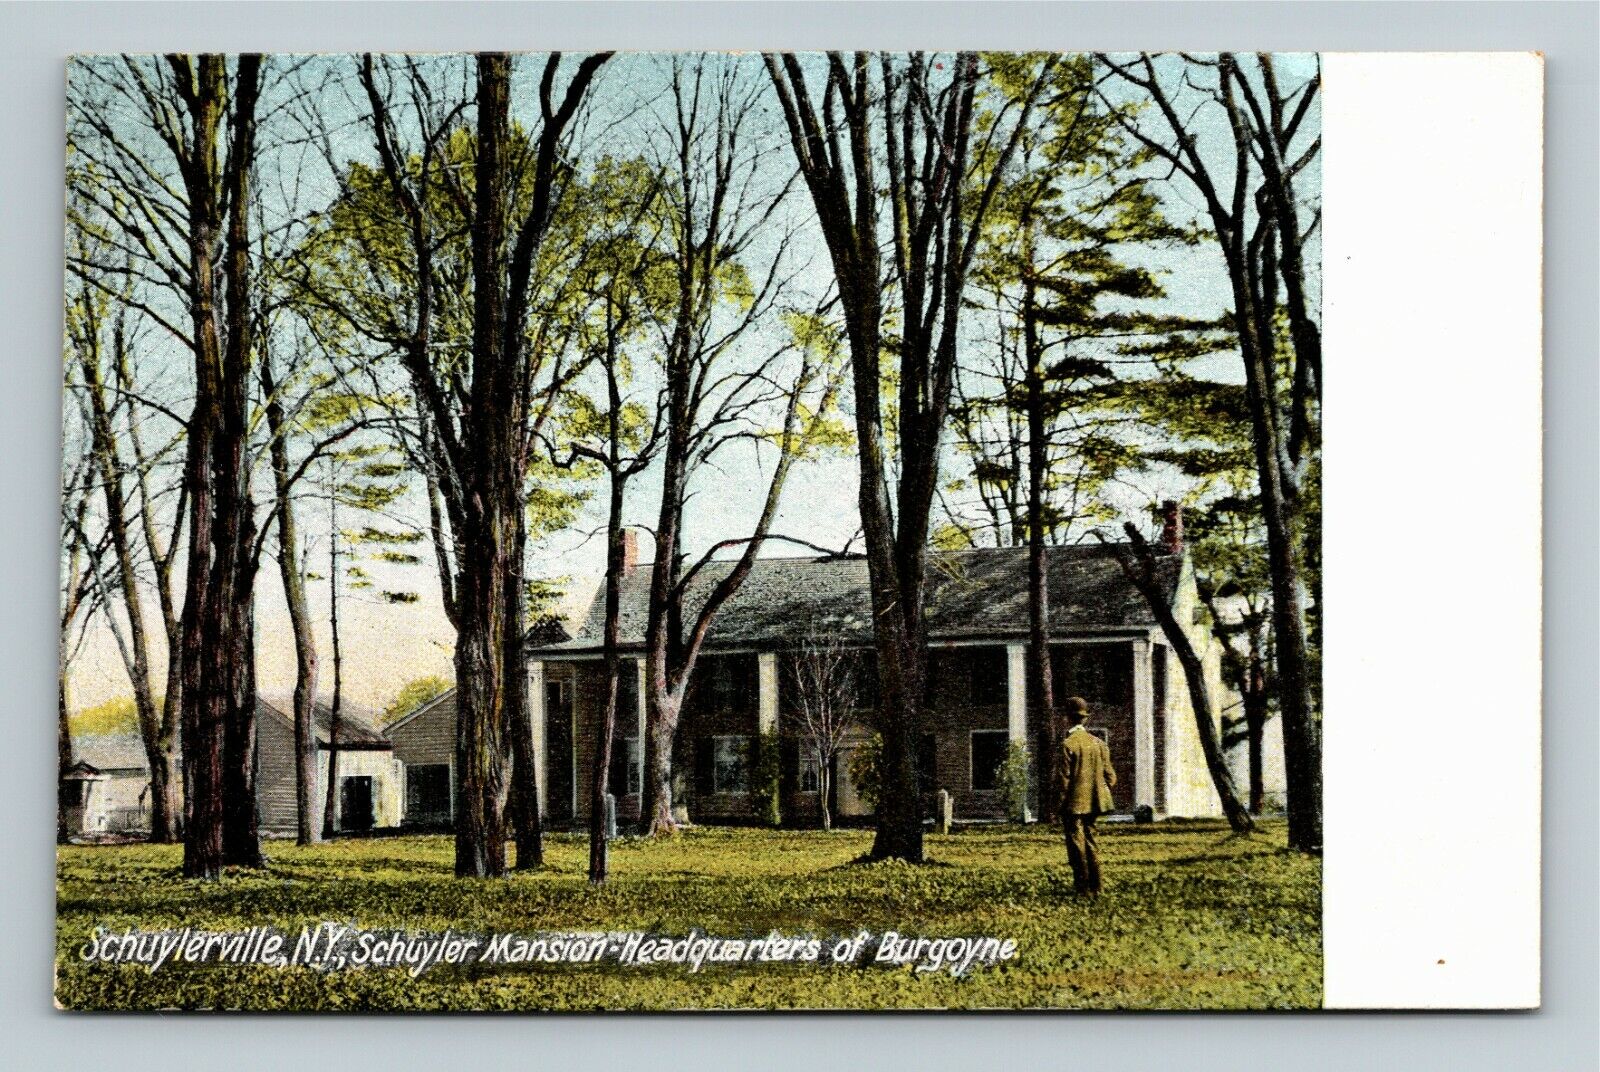 Schuylerville NY-New York Schuyler Mansion Burgoyne Headquarter Vintage Postcard